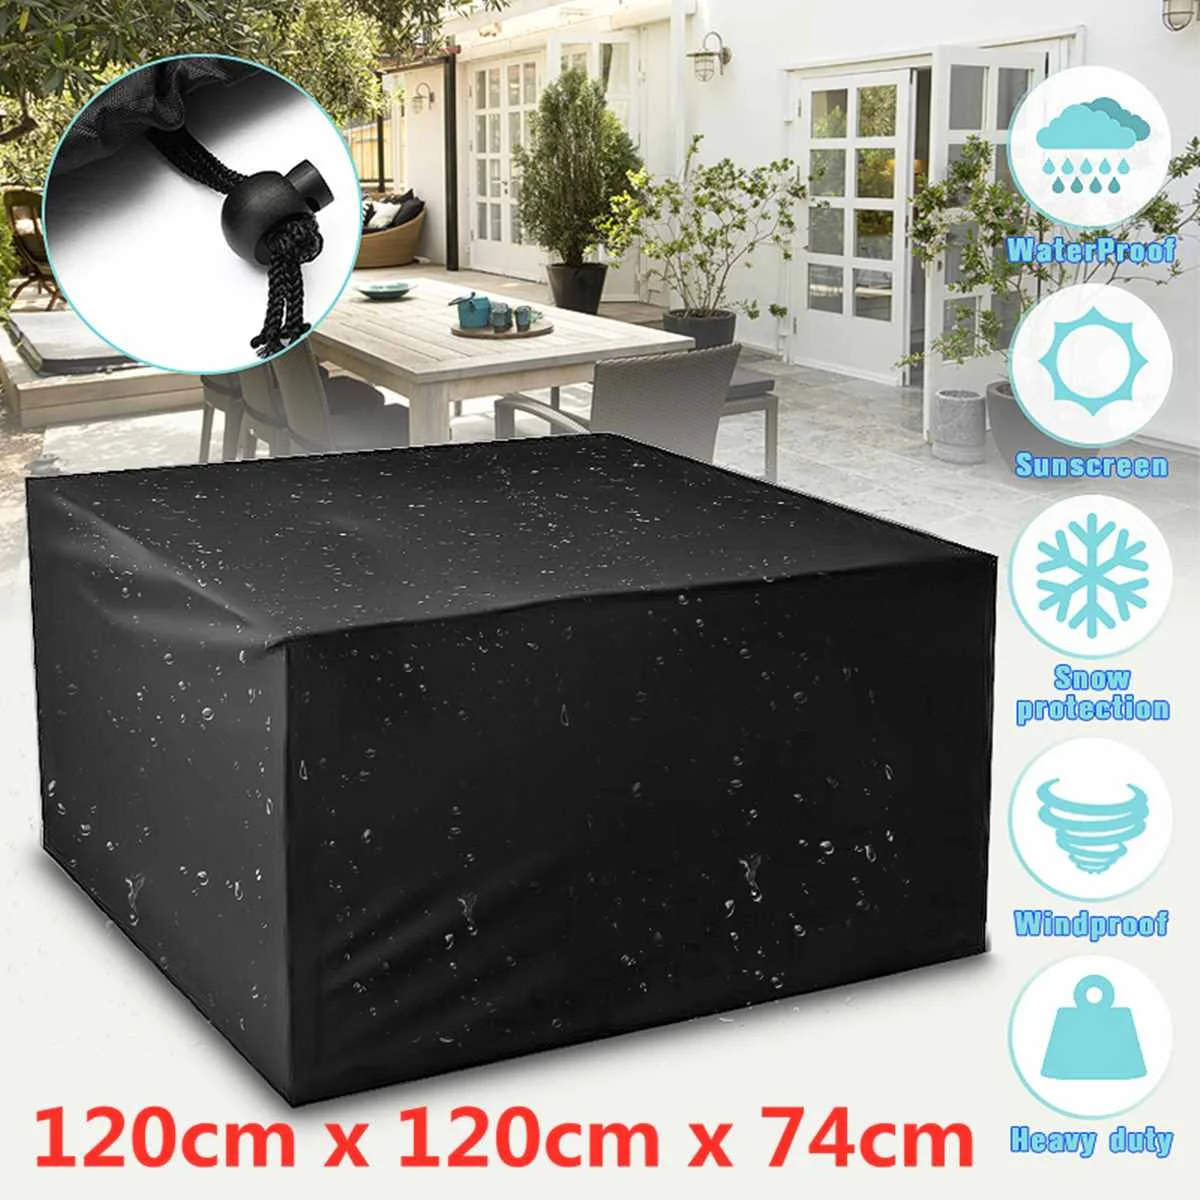 

120cm x 120cm x 74cm 210D Garden Patio Furniture Cover Set Outdoor Rattan Cube Table Sun Shelter Waterproof Furniture Dust Cover